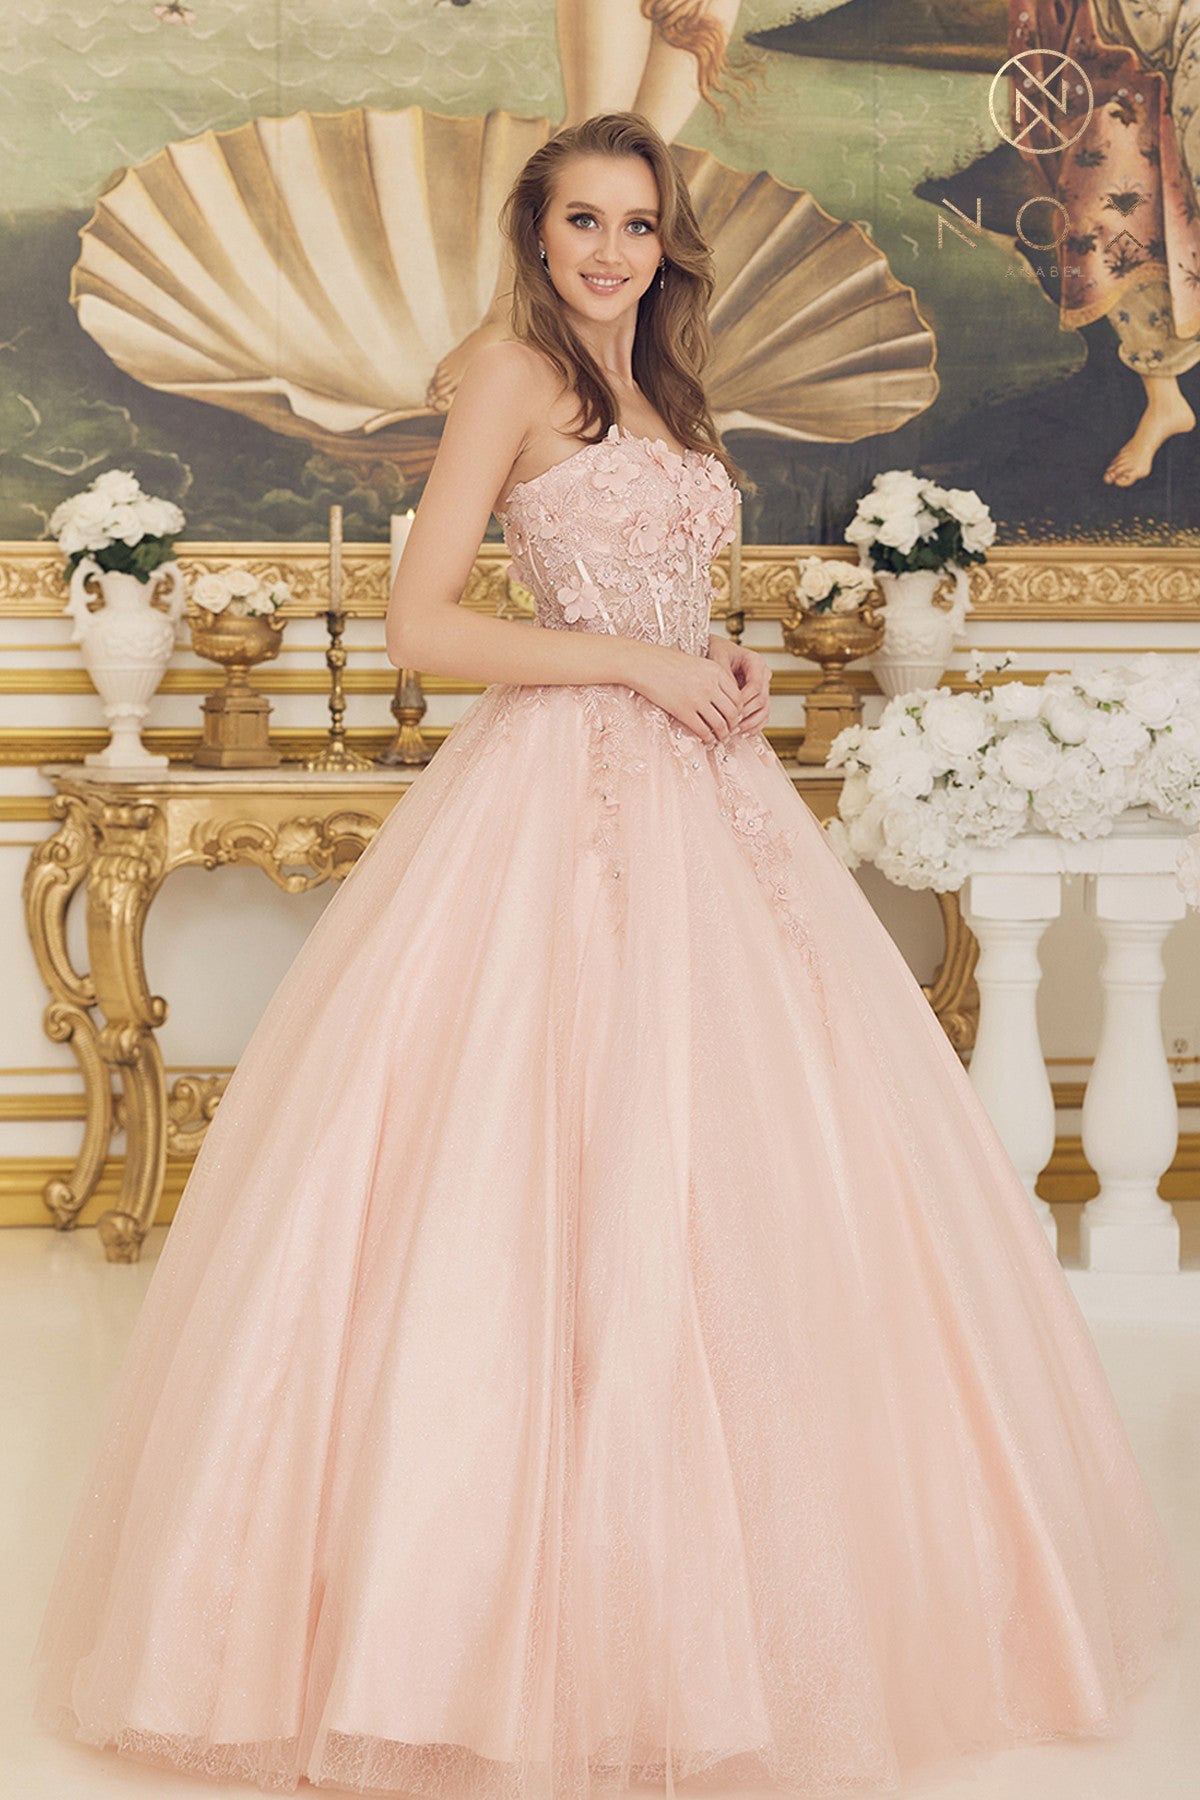 Papilio Bridal 2020 Wedding Dresses — “Impression” Collection Part 2 |  Wedding Inspirasi | Pink wedding gowns, Wedding dresses blush, Gowns